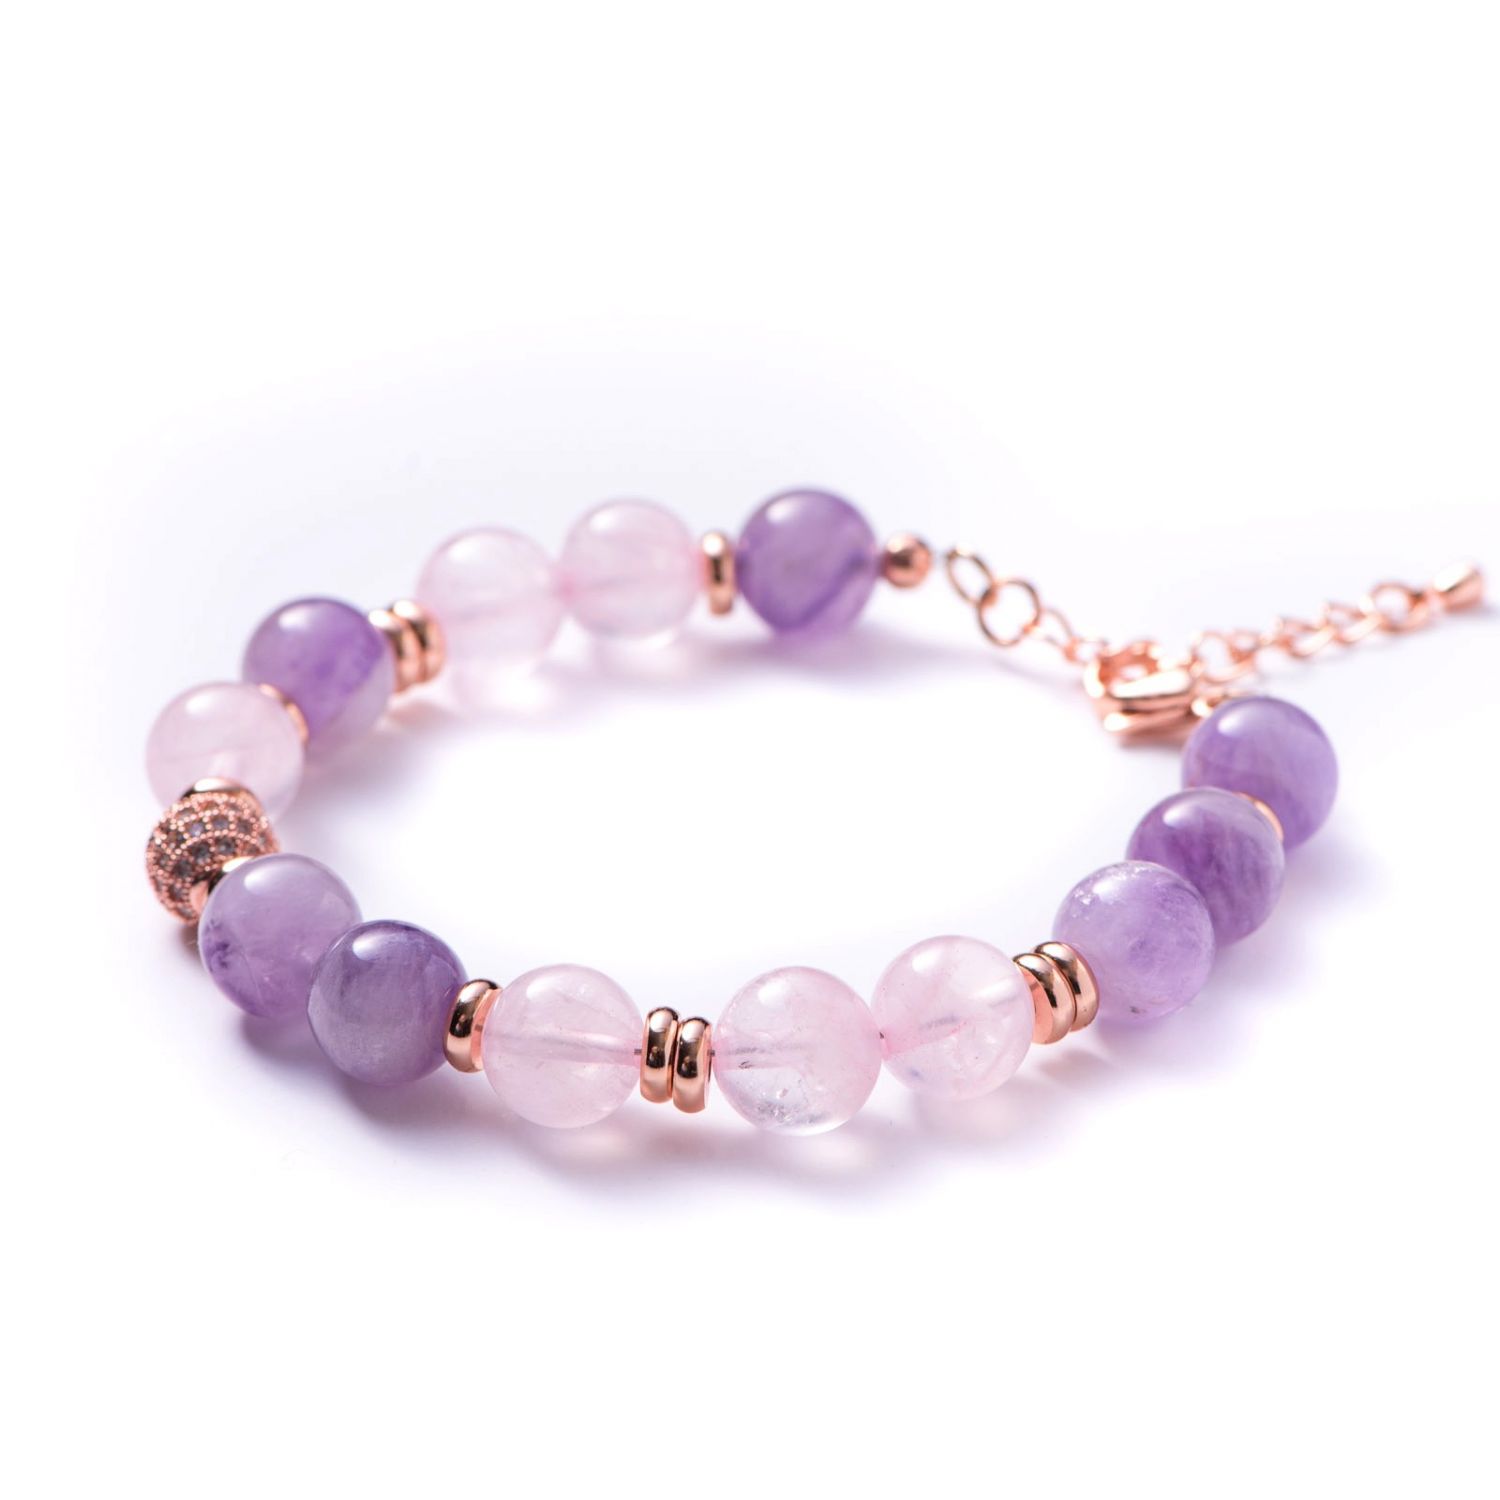 Bracelet amethyst lavender, pink quartz